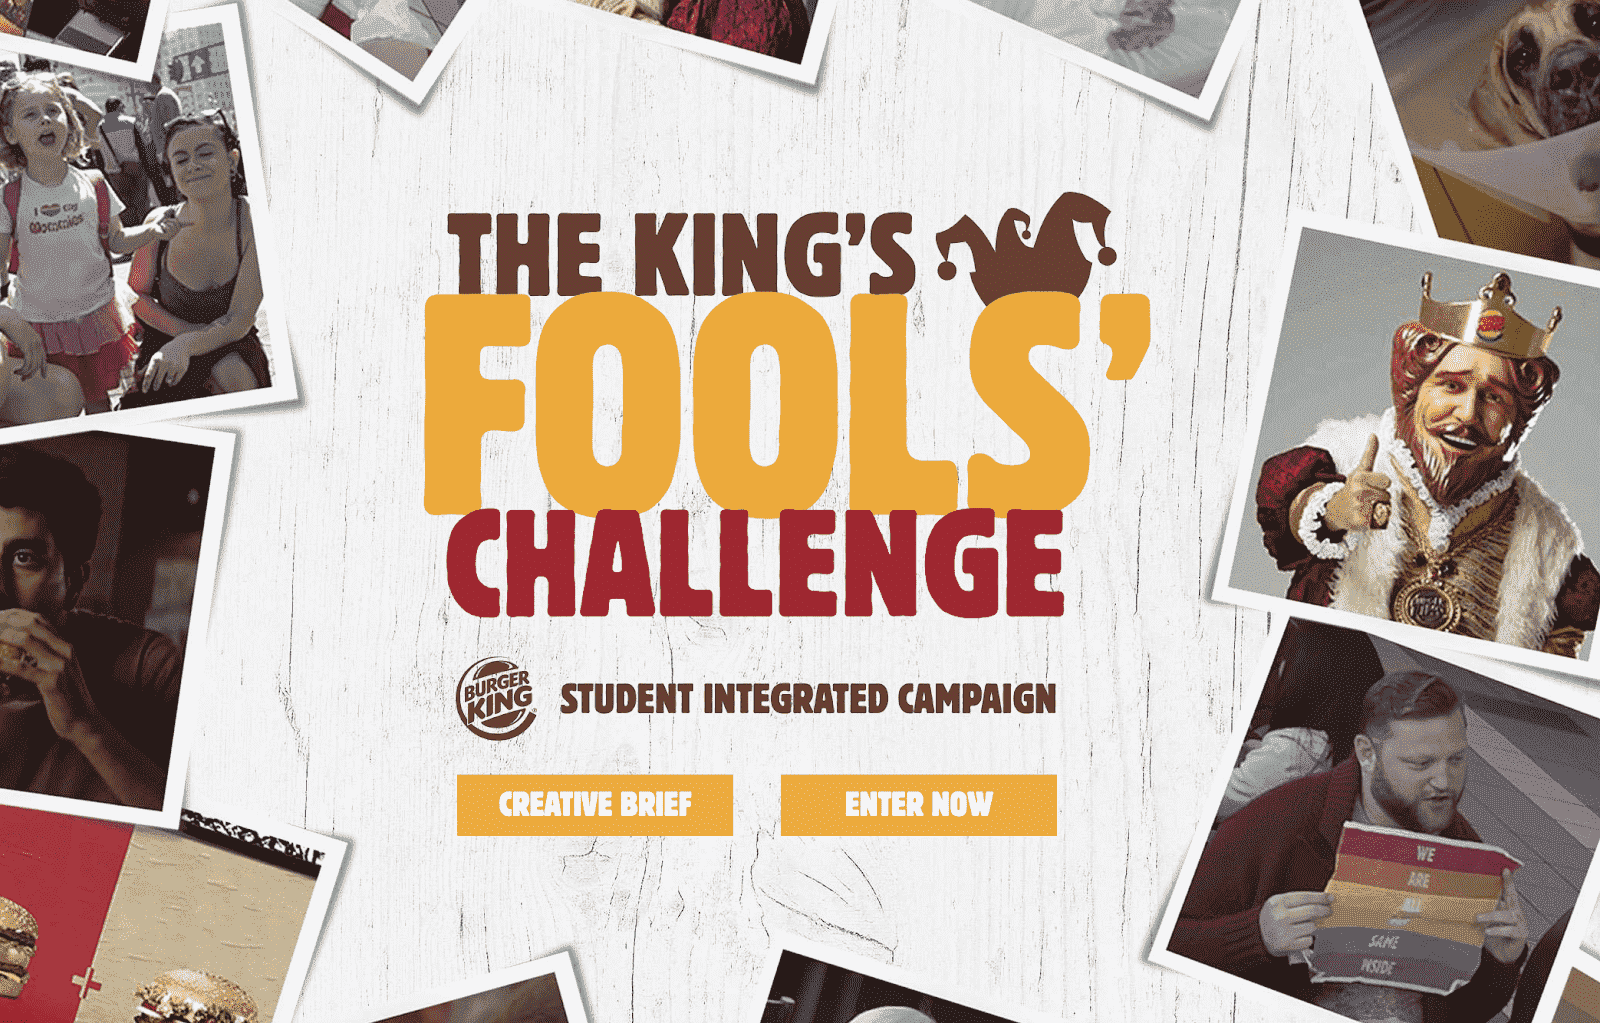 Burger King: The King's Fool's Challenge